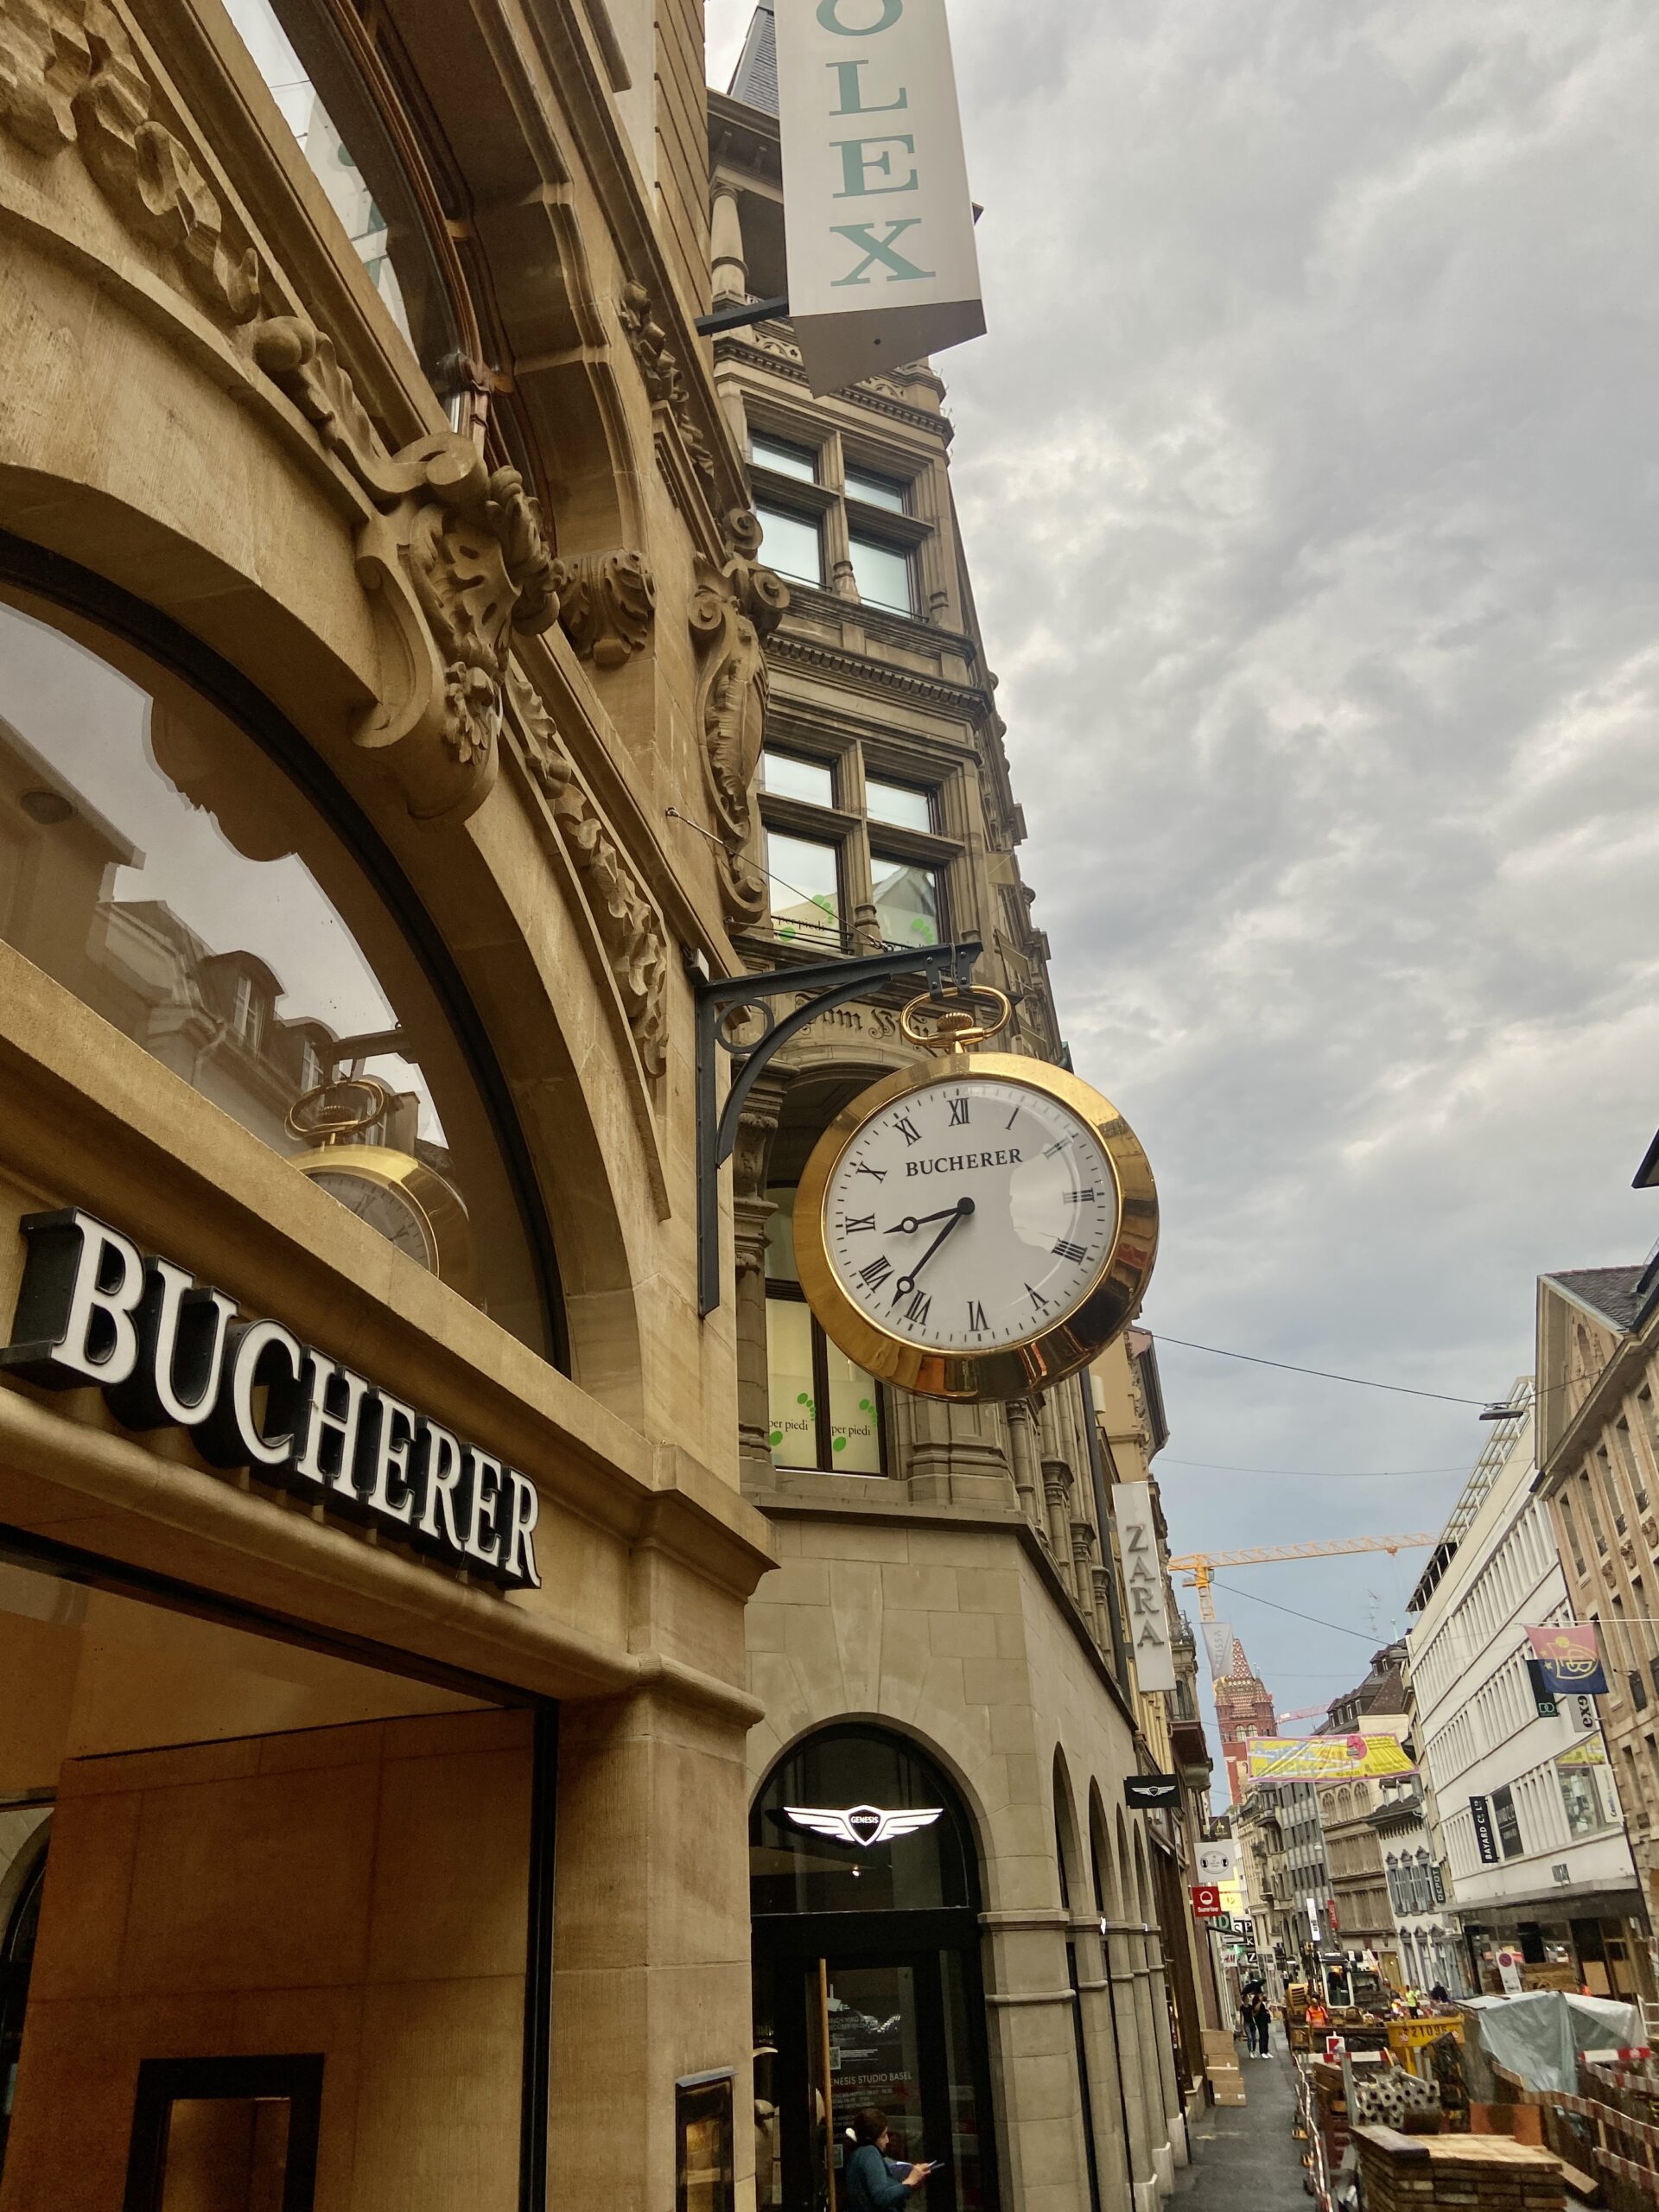 Bucherer in Basel